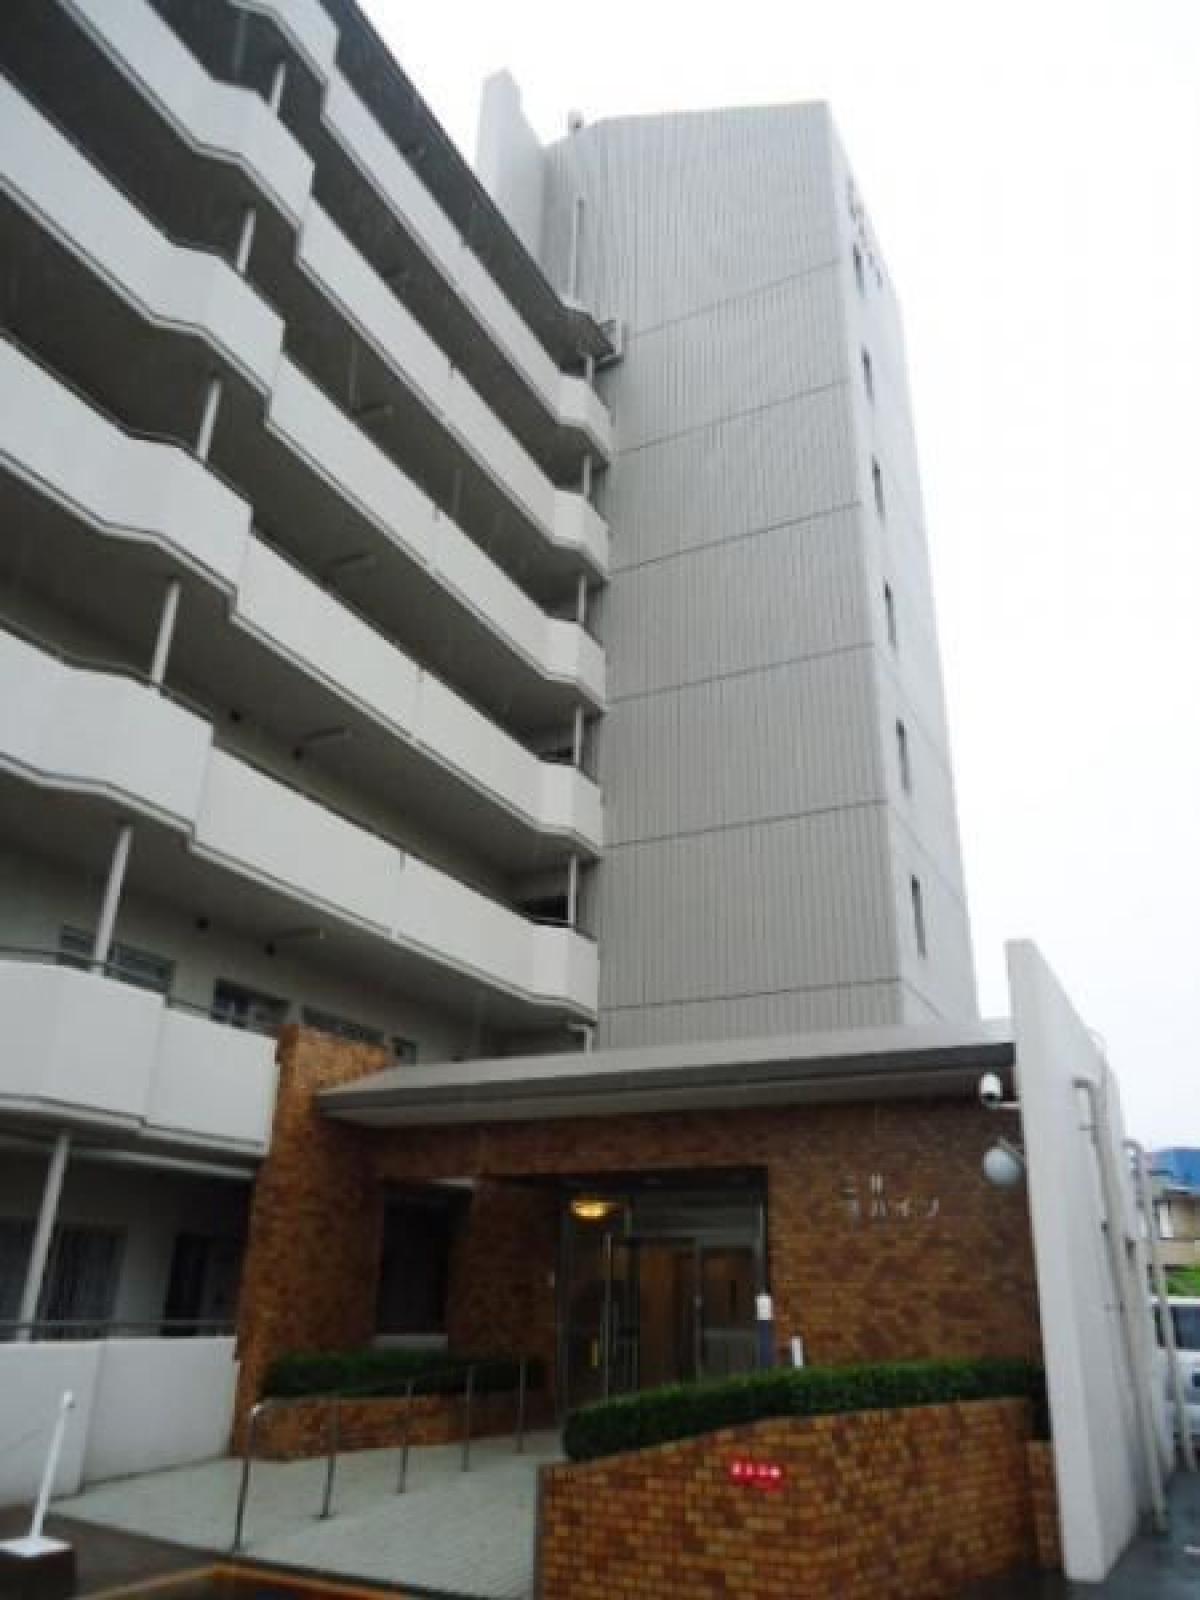 Picture of Apartment For Sale in Fukuoka Shi Sawara Ku, Fukuoka, Japan